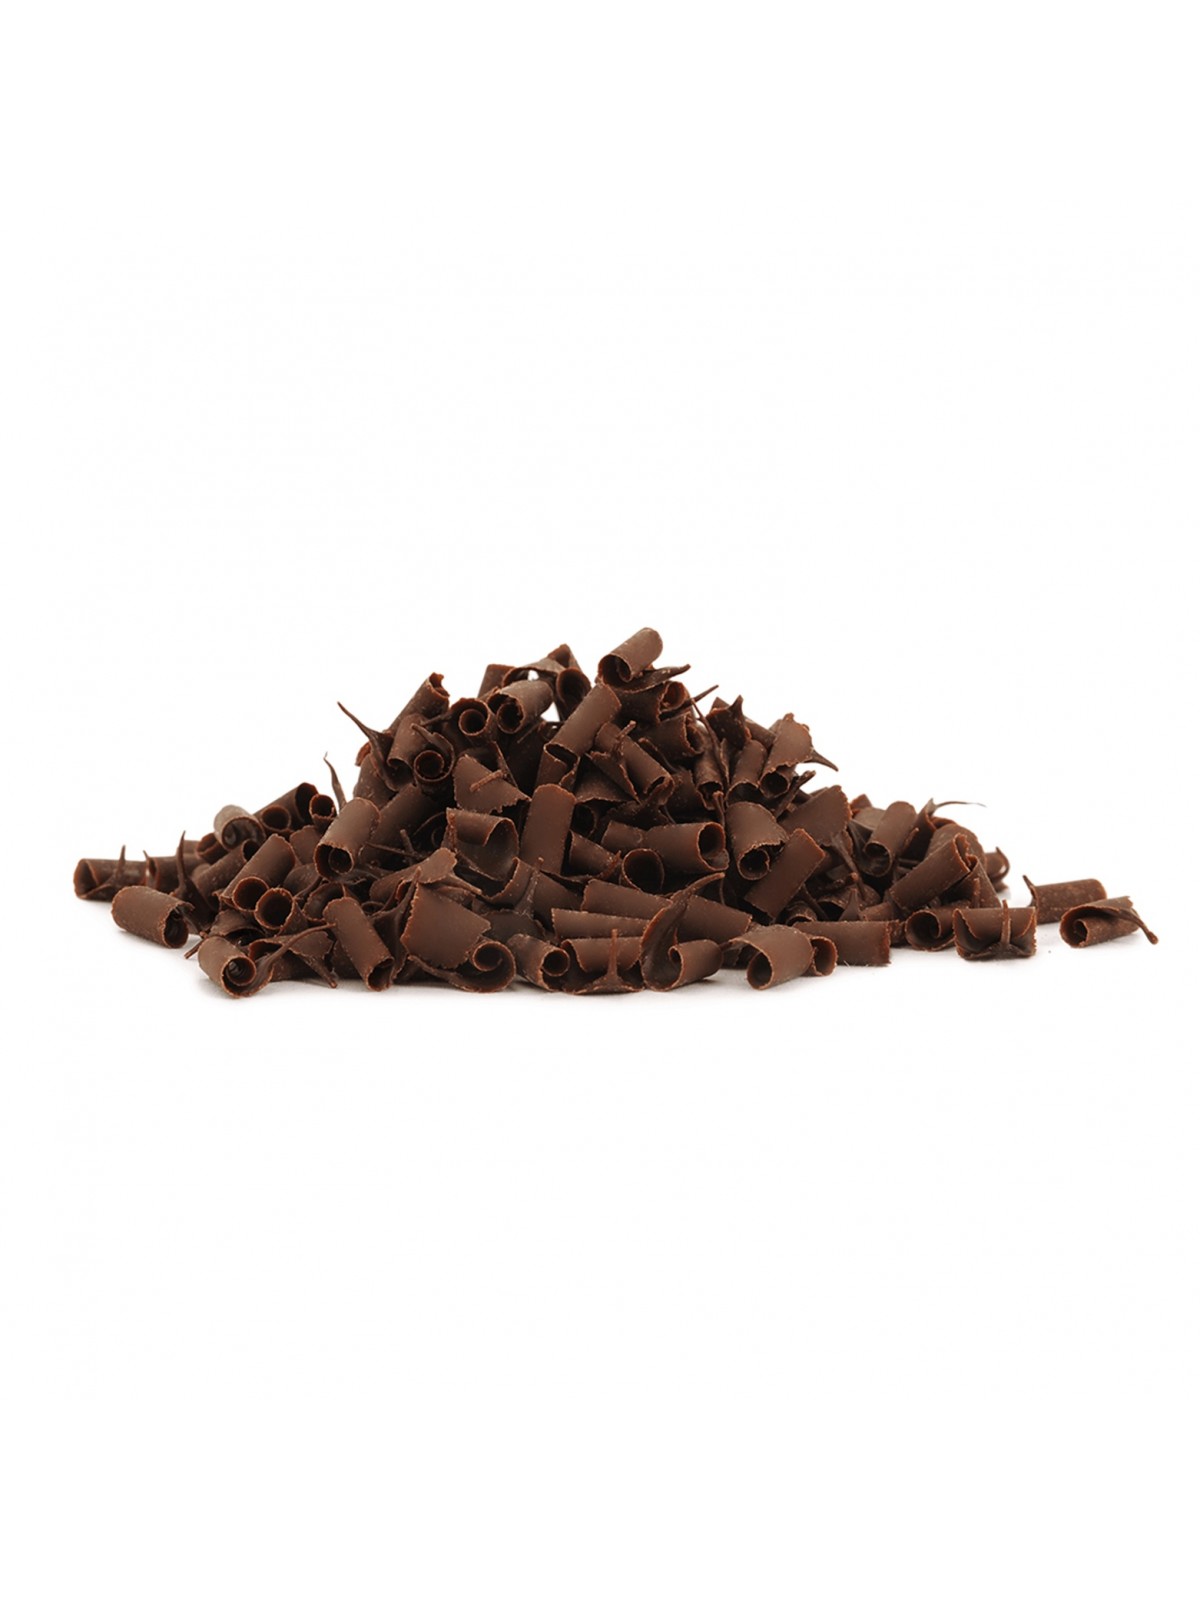 Schokolade Knick  mini - Dunkel - 150g